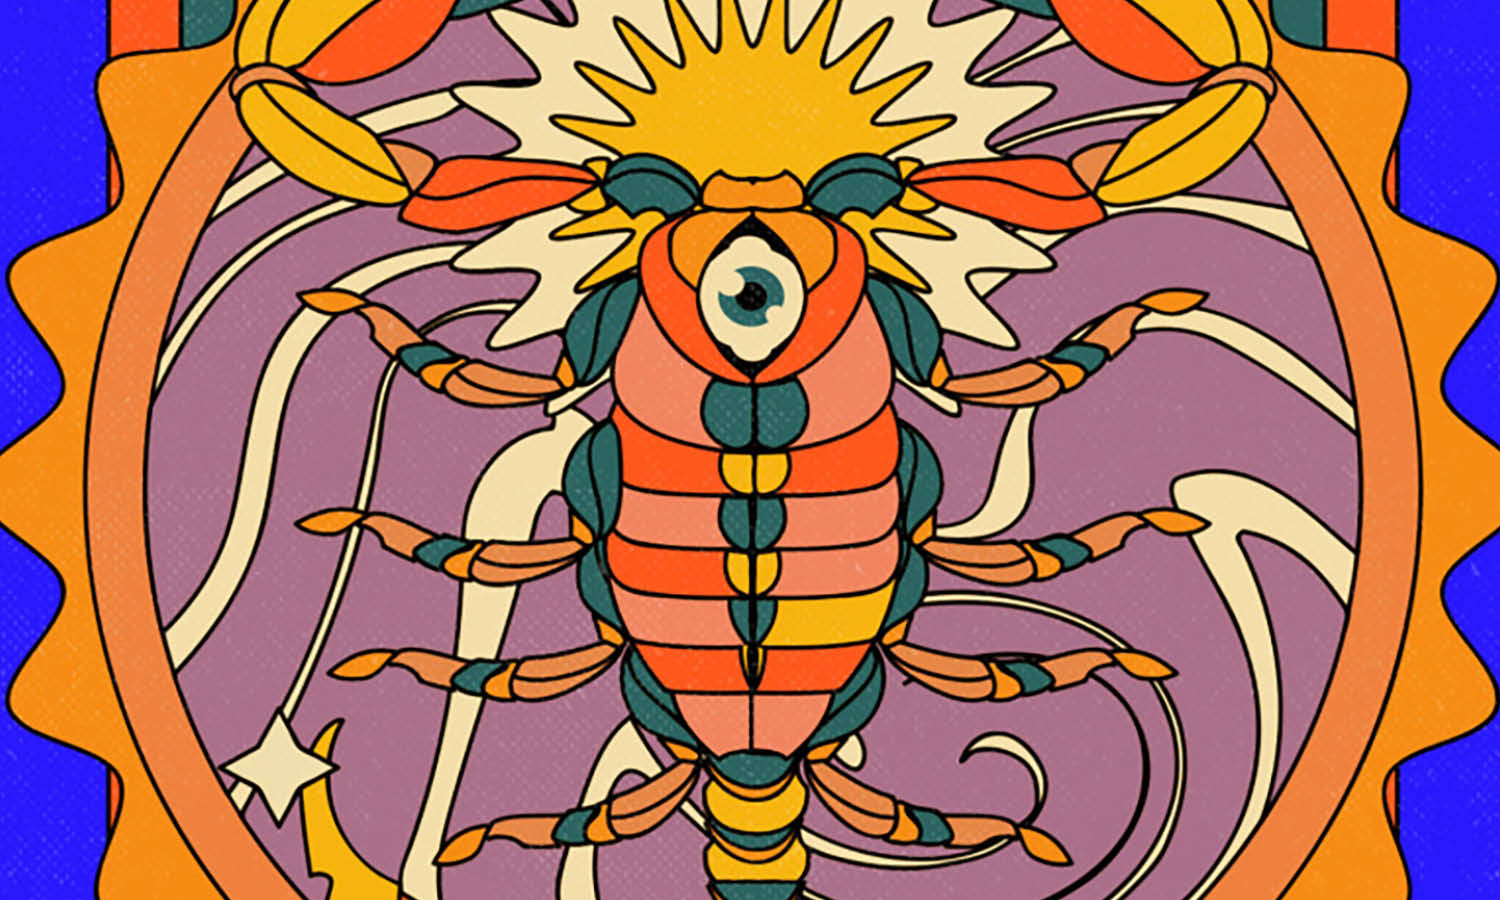 30 Best Scorpion Illustration Ideas You Should Check